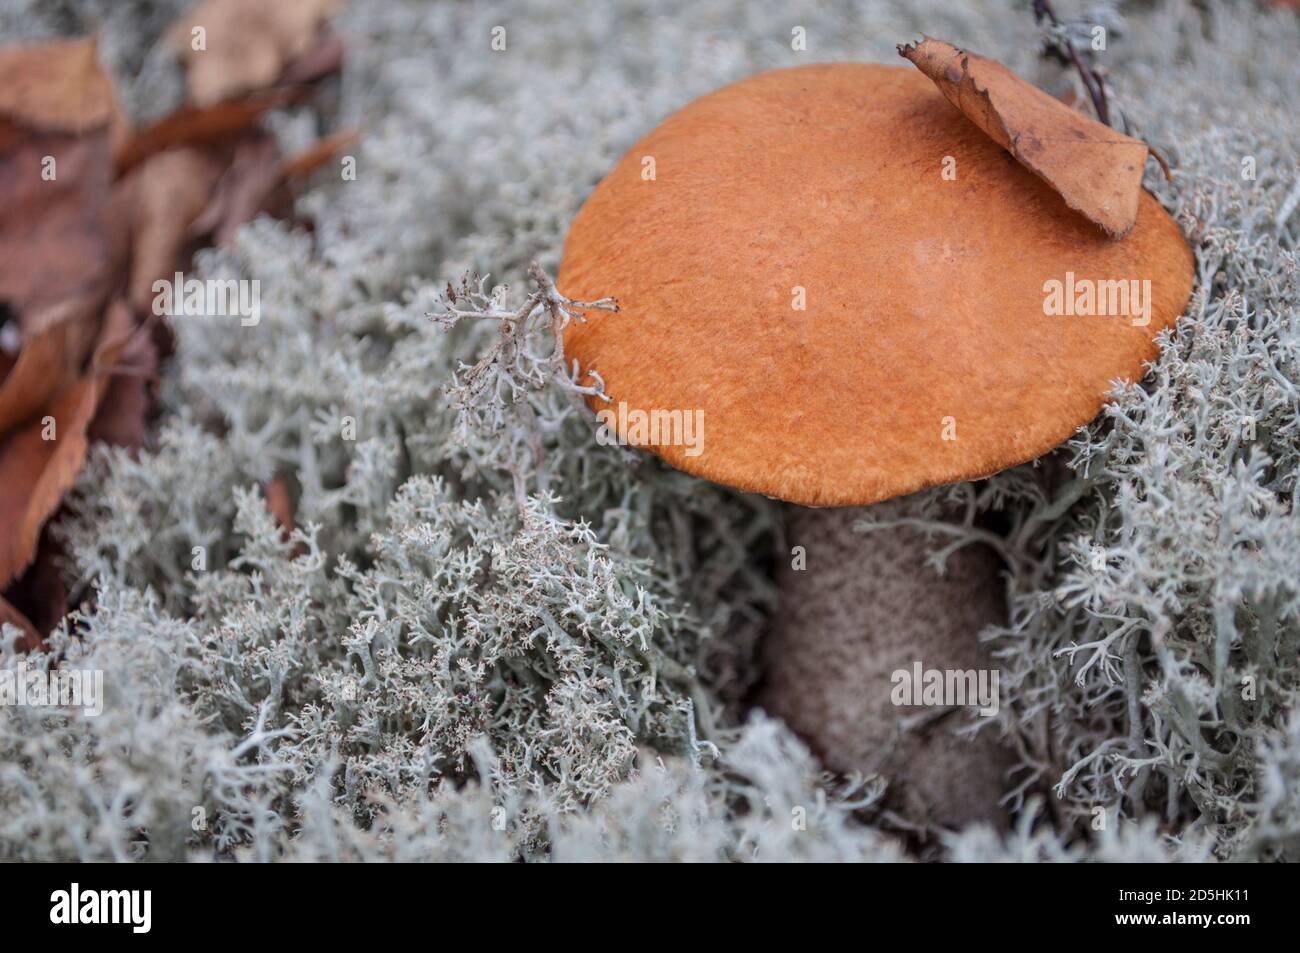 birch mushroom with an orange cap on gray moss Stock Photo